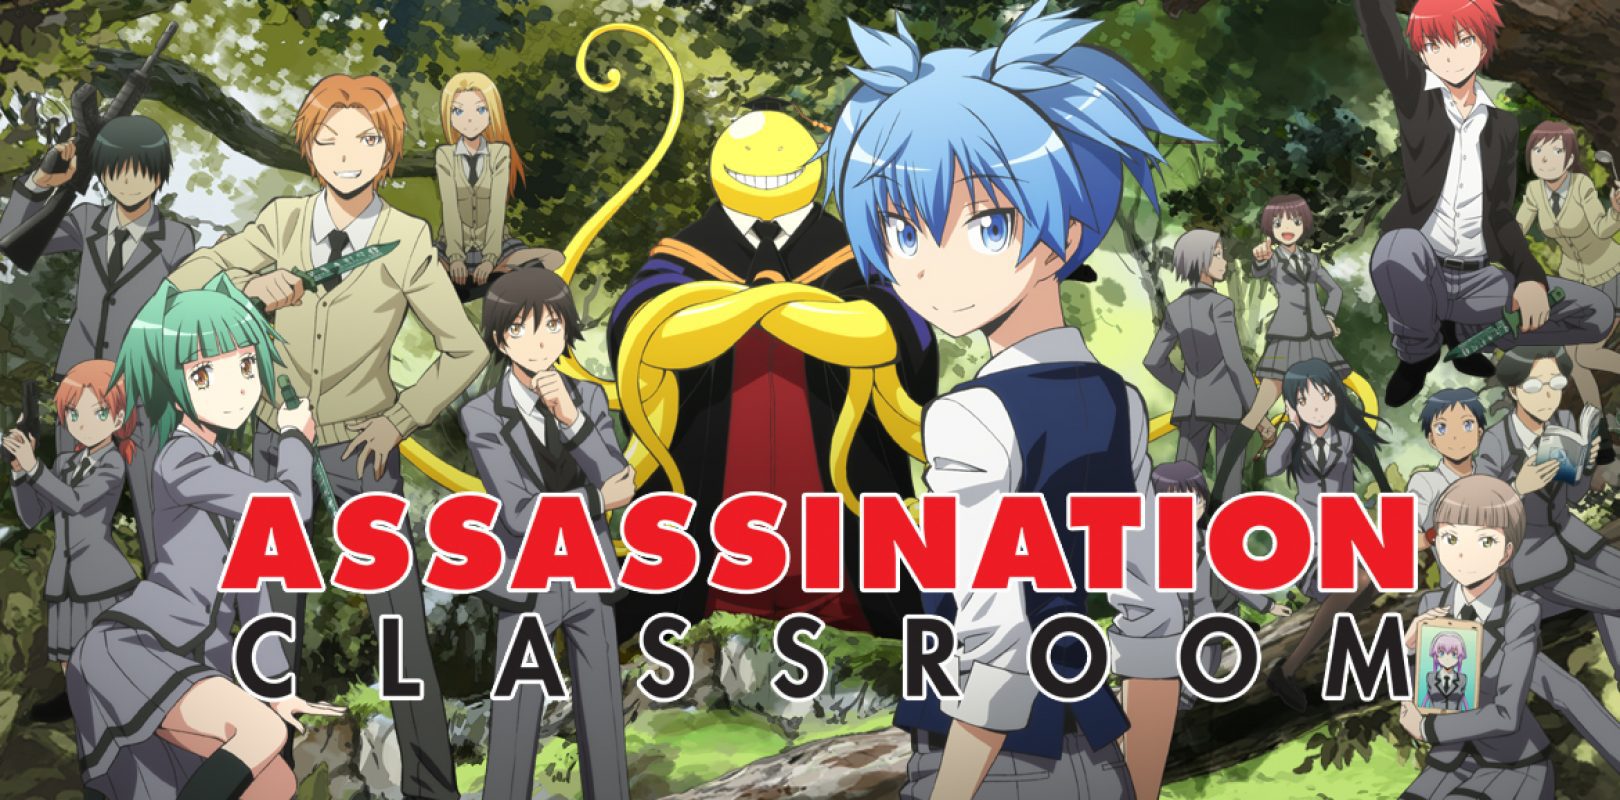 The Assassination Classroom -anime series on netflix